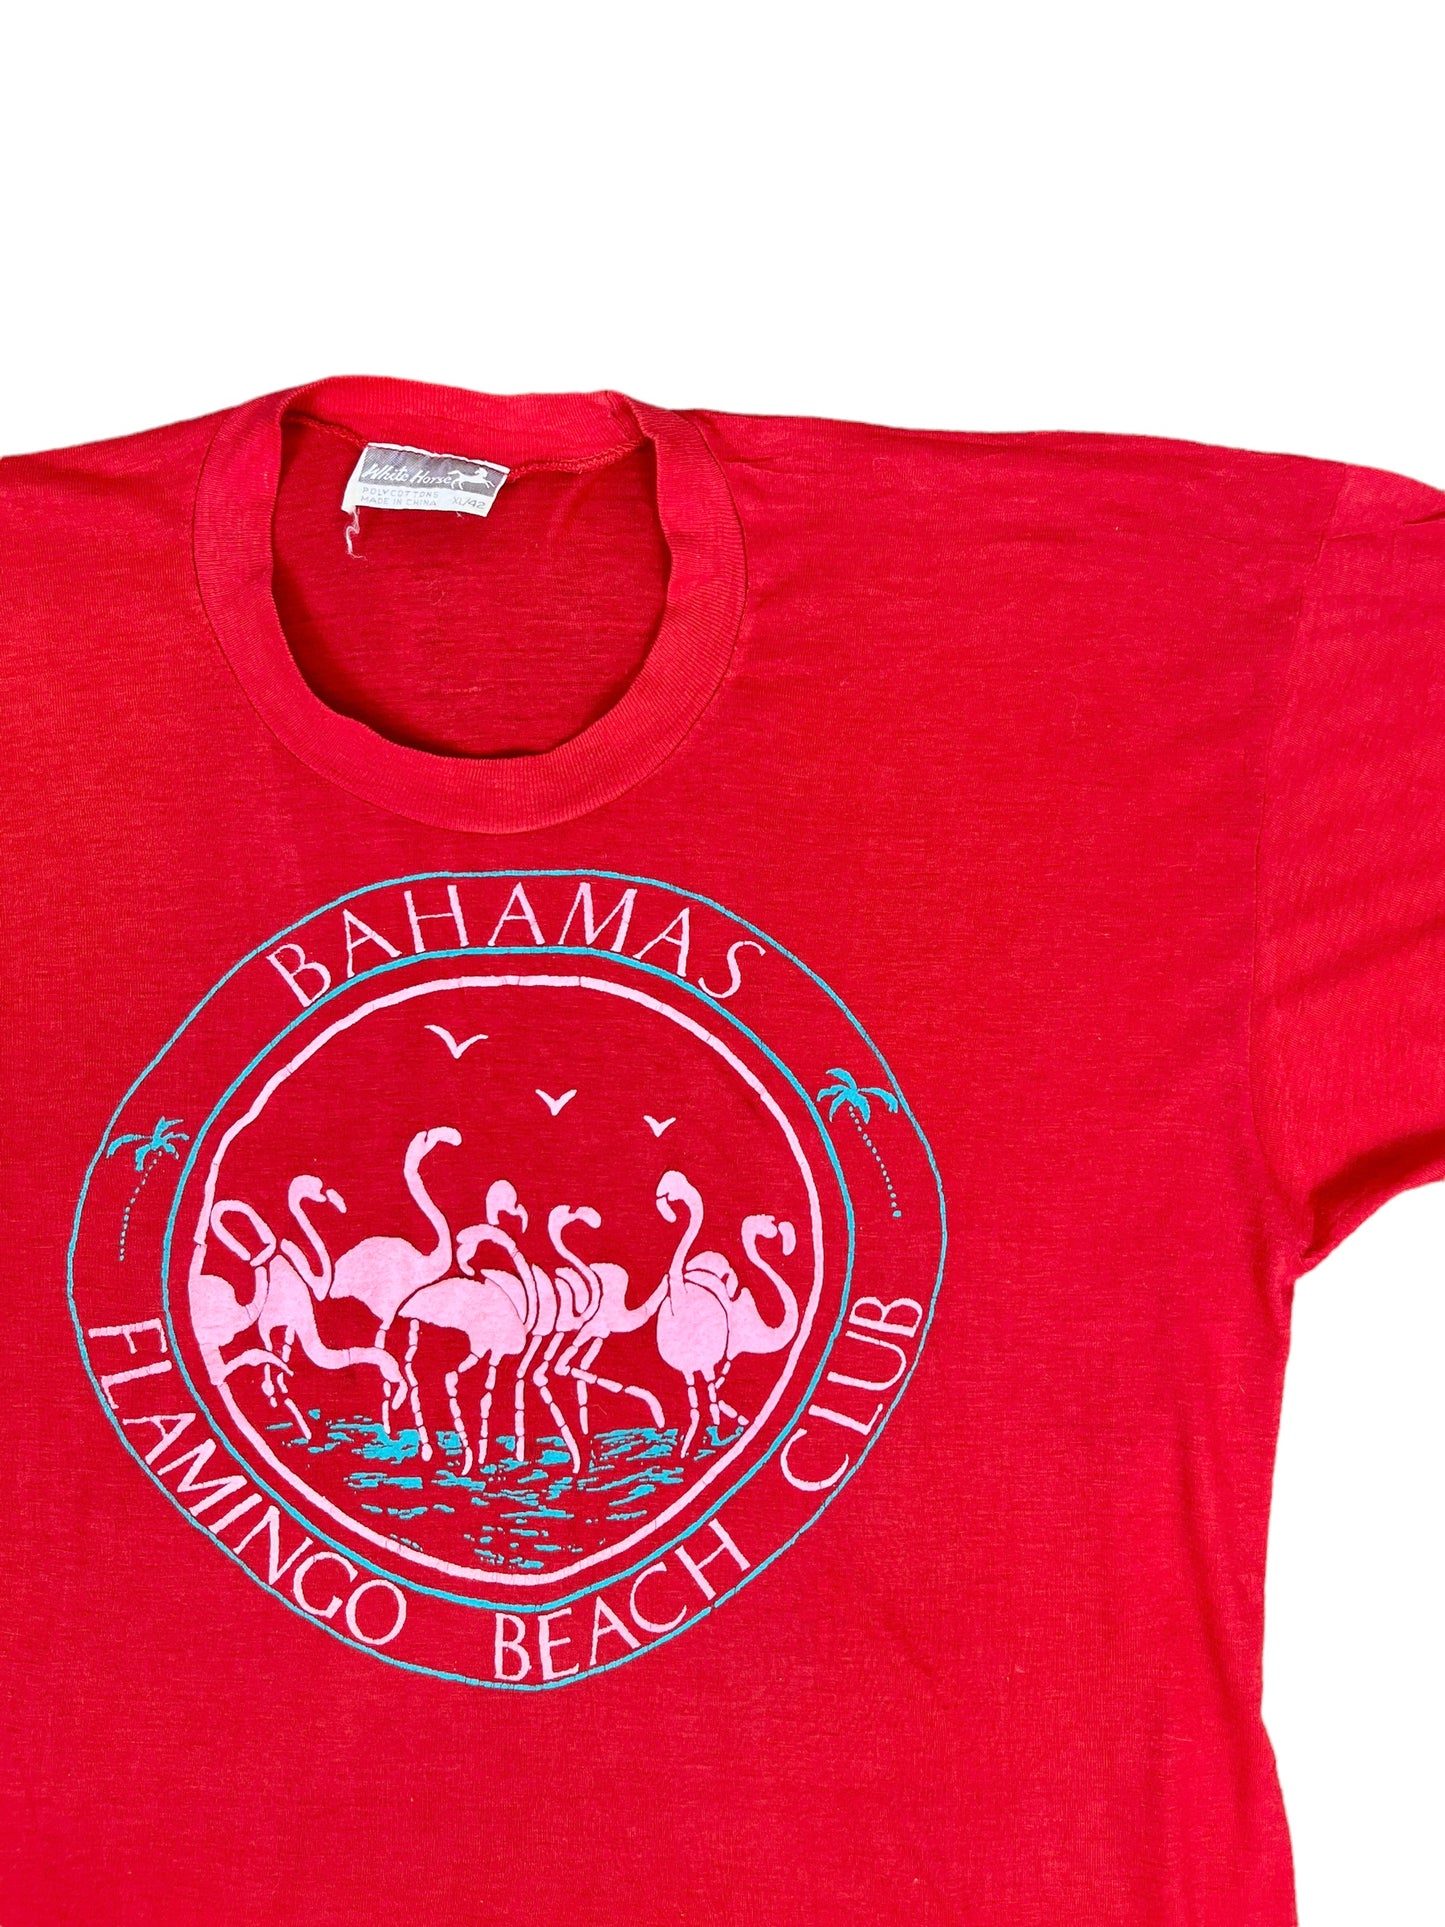 Women’s Vintage 80’s Bahamas T Shirt - XL